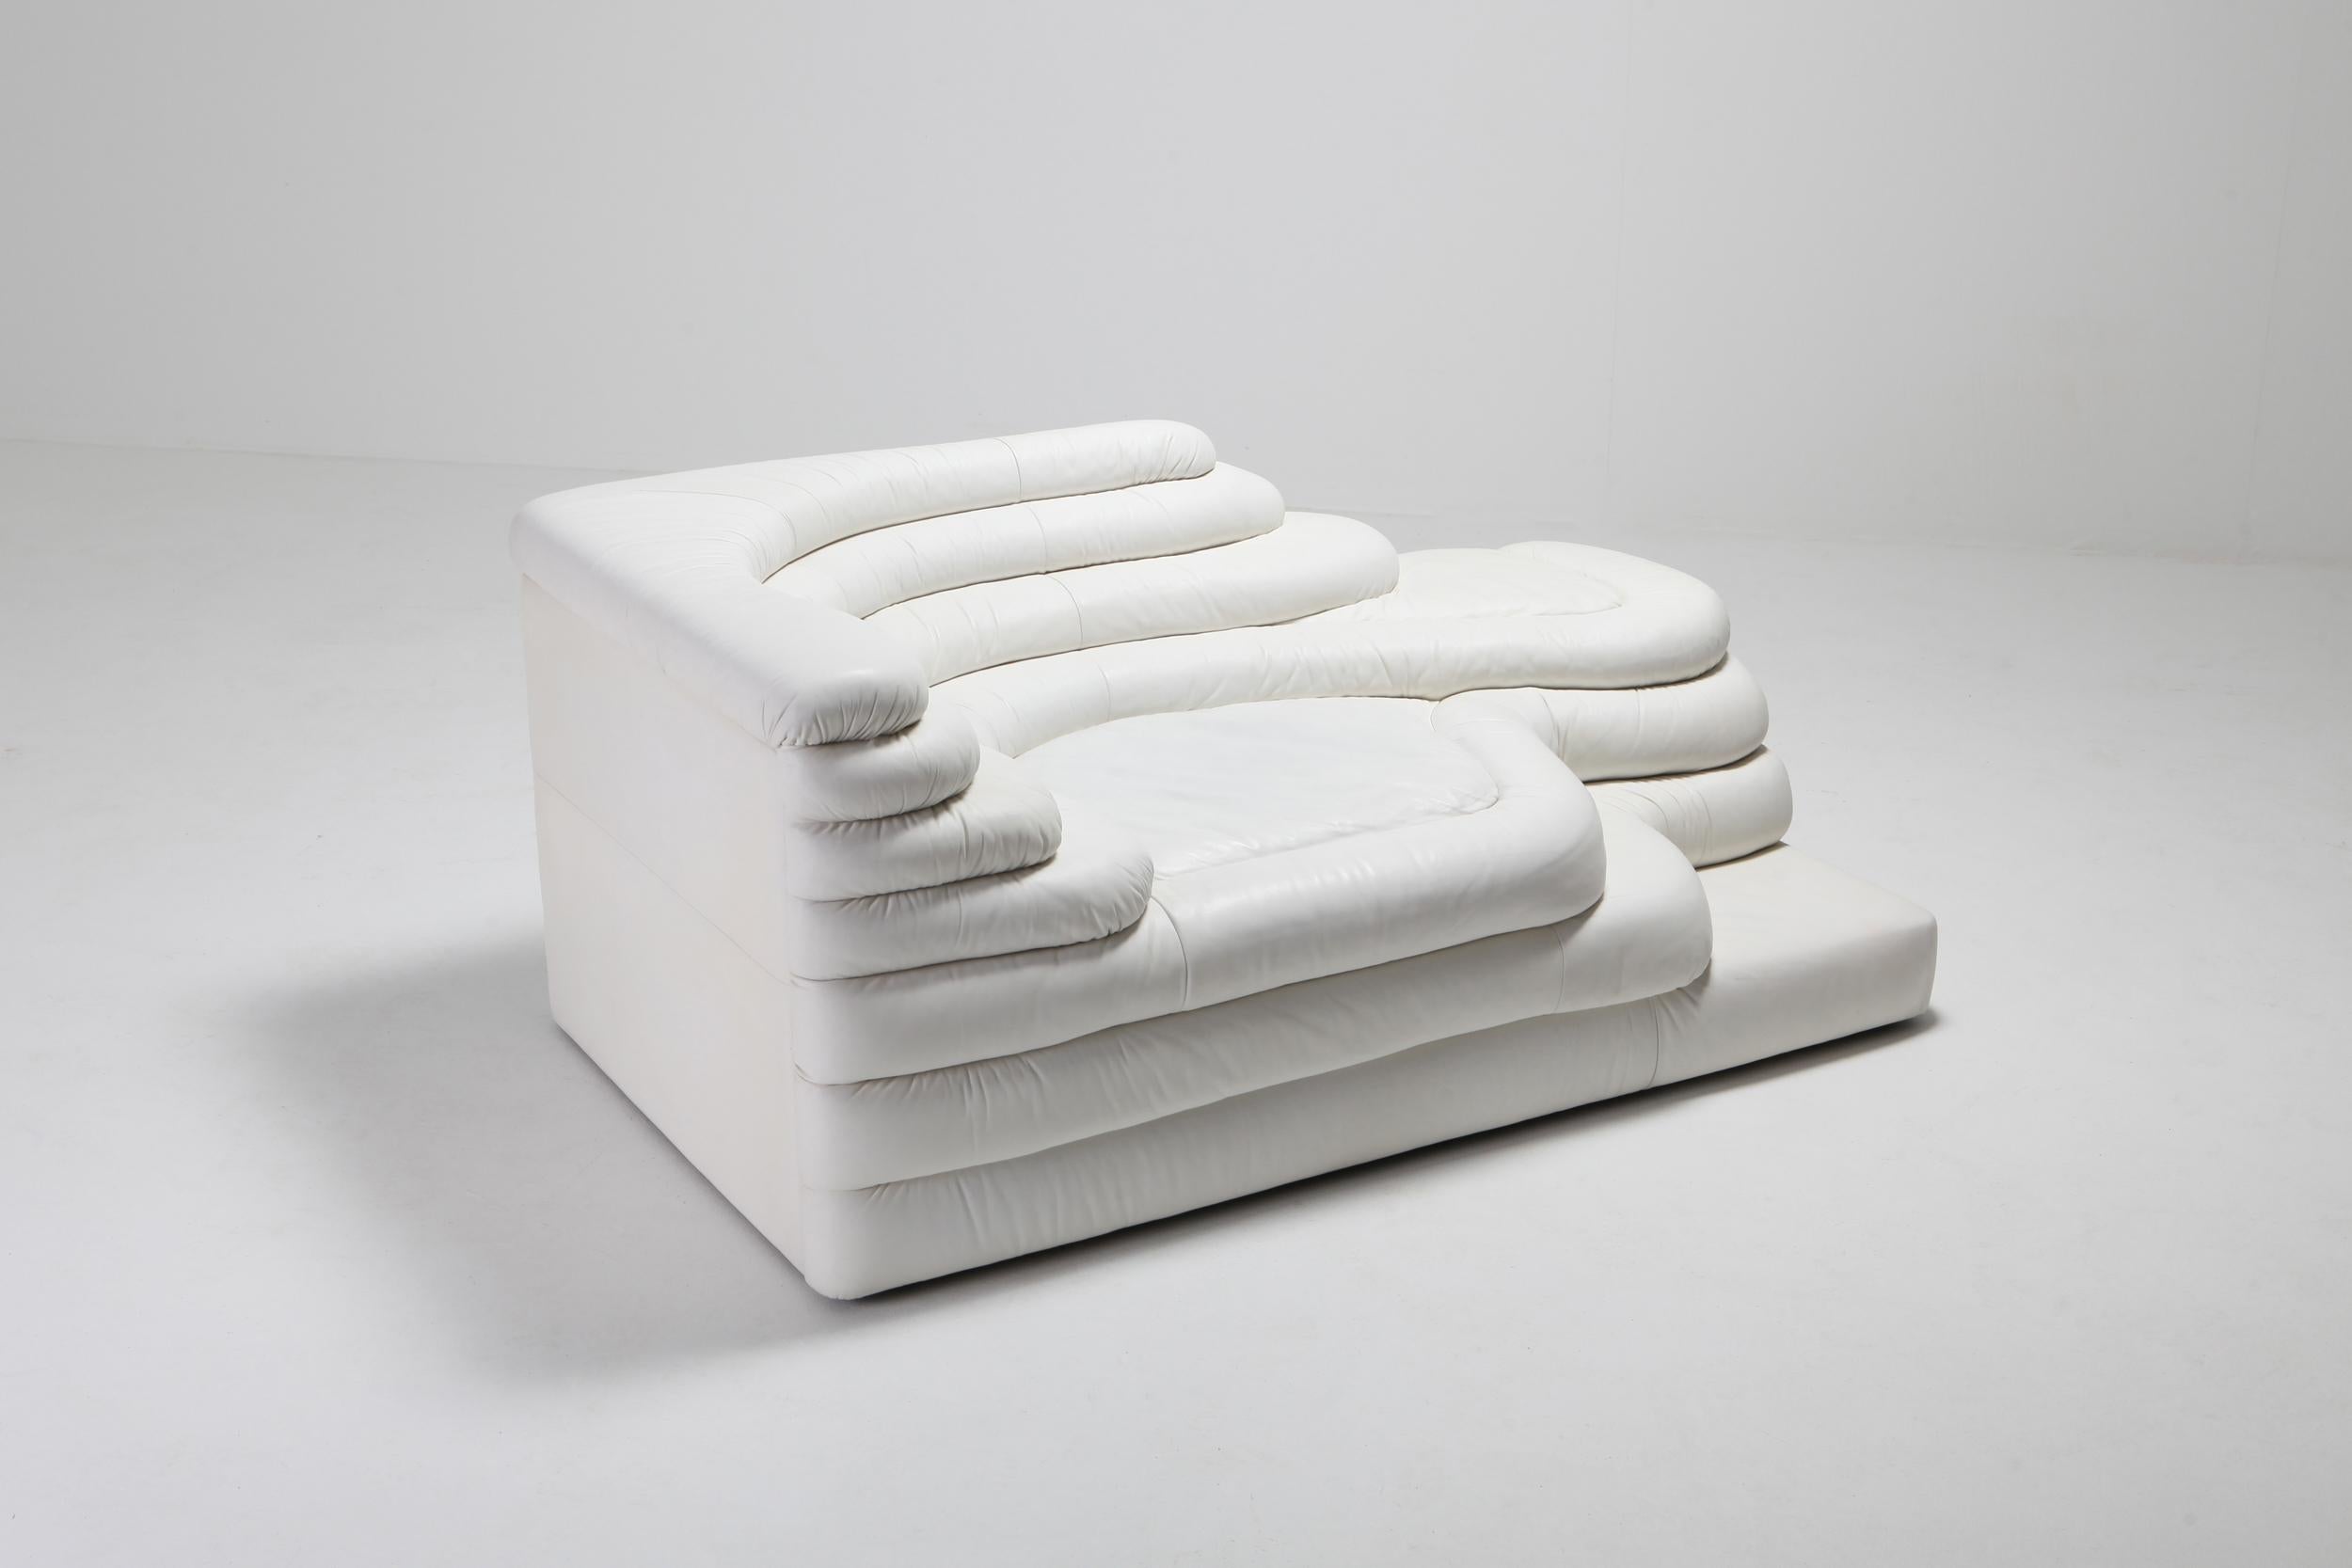 Post-Modern De Sede 'Terrazza' Lounge Chair in White Leather 1972 by U. Klug & Ueli Berger